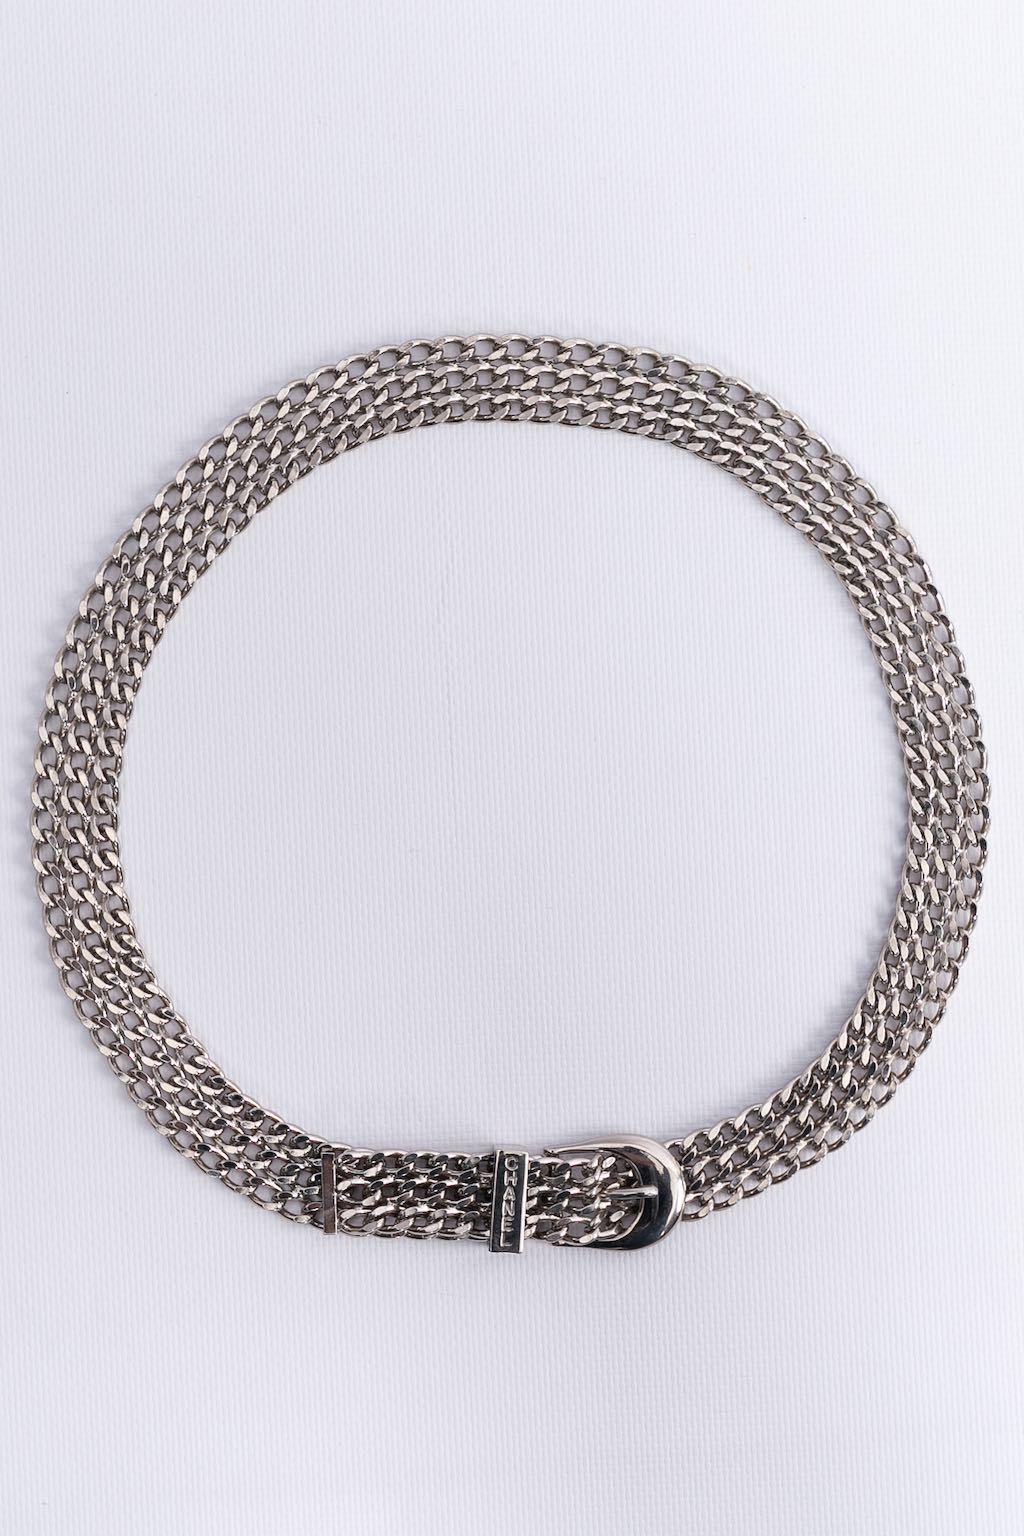 Women's Chanel Silver Plated Flexible Belt For Sale